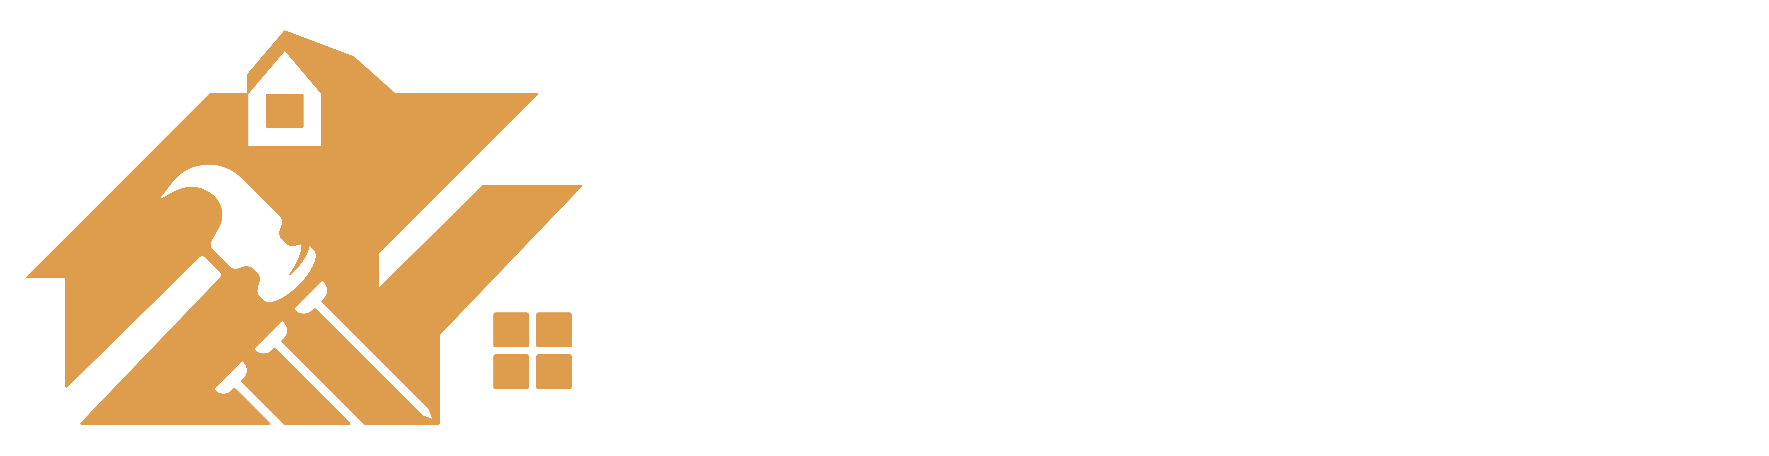 Huber DAM, LLC